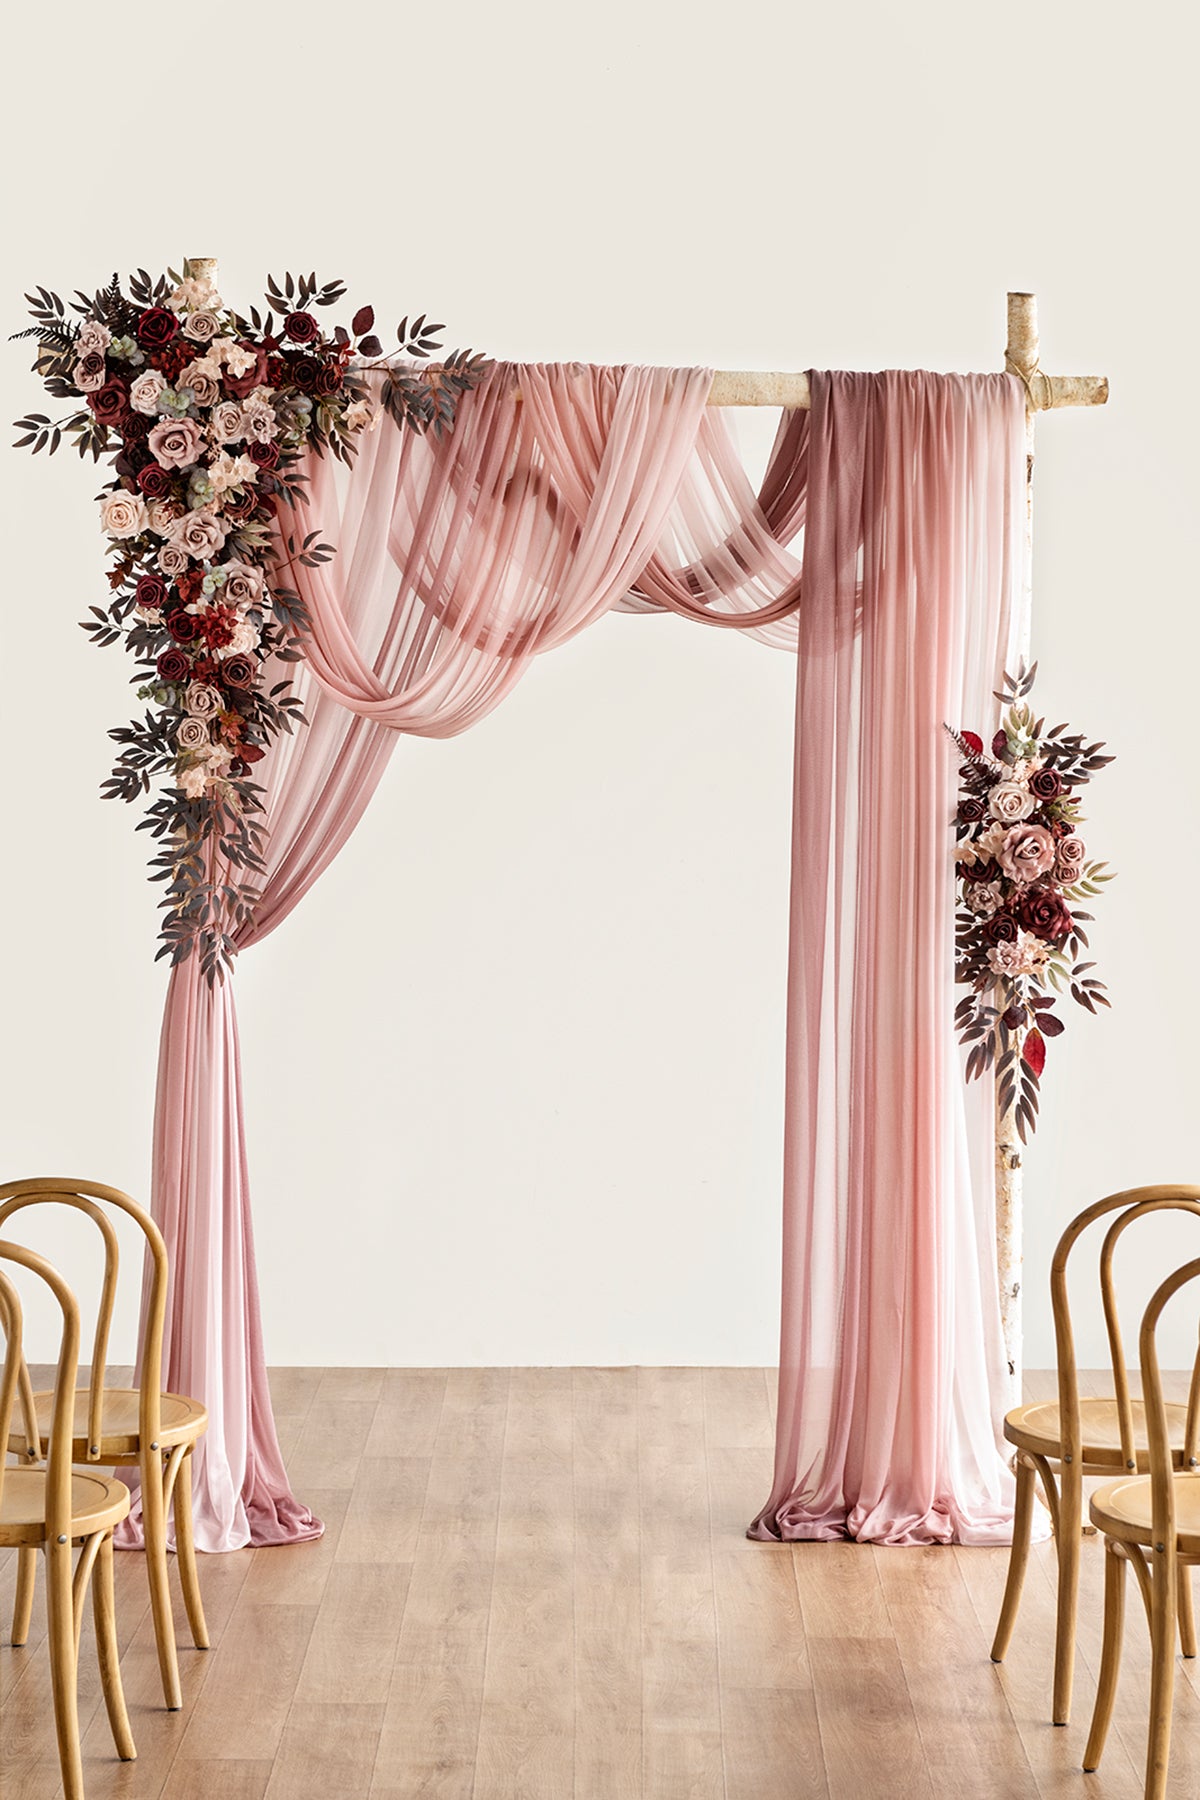 Freestanding Wedding & Event Arch